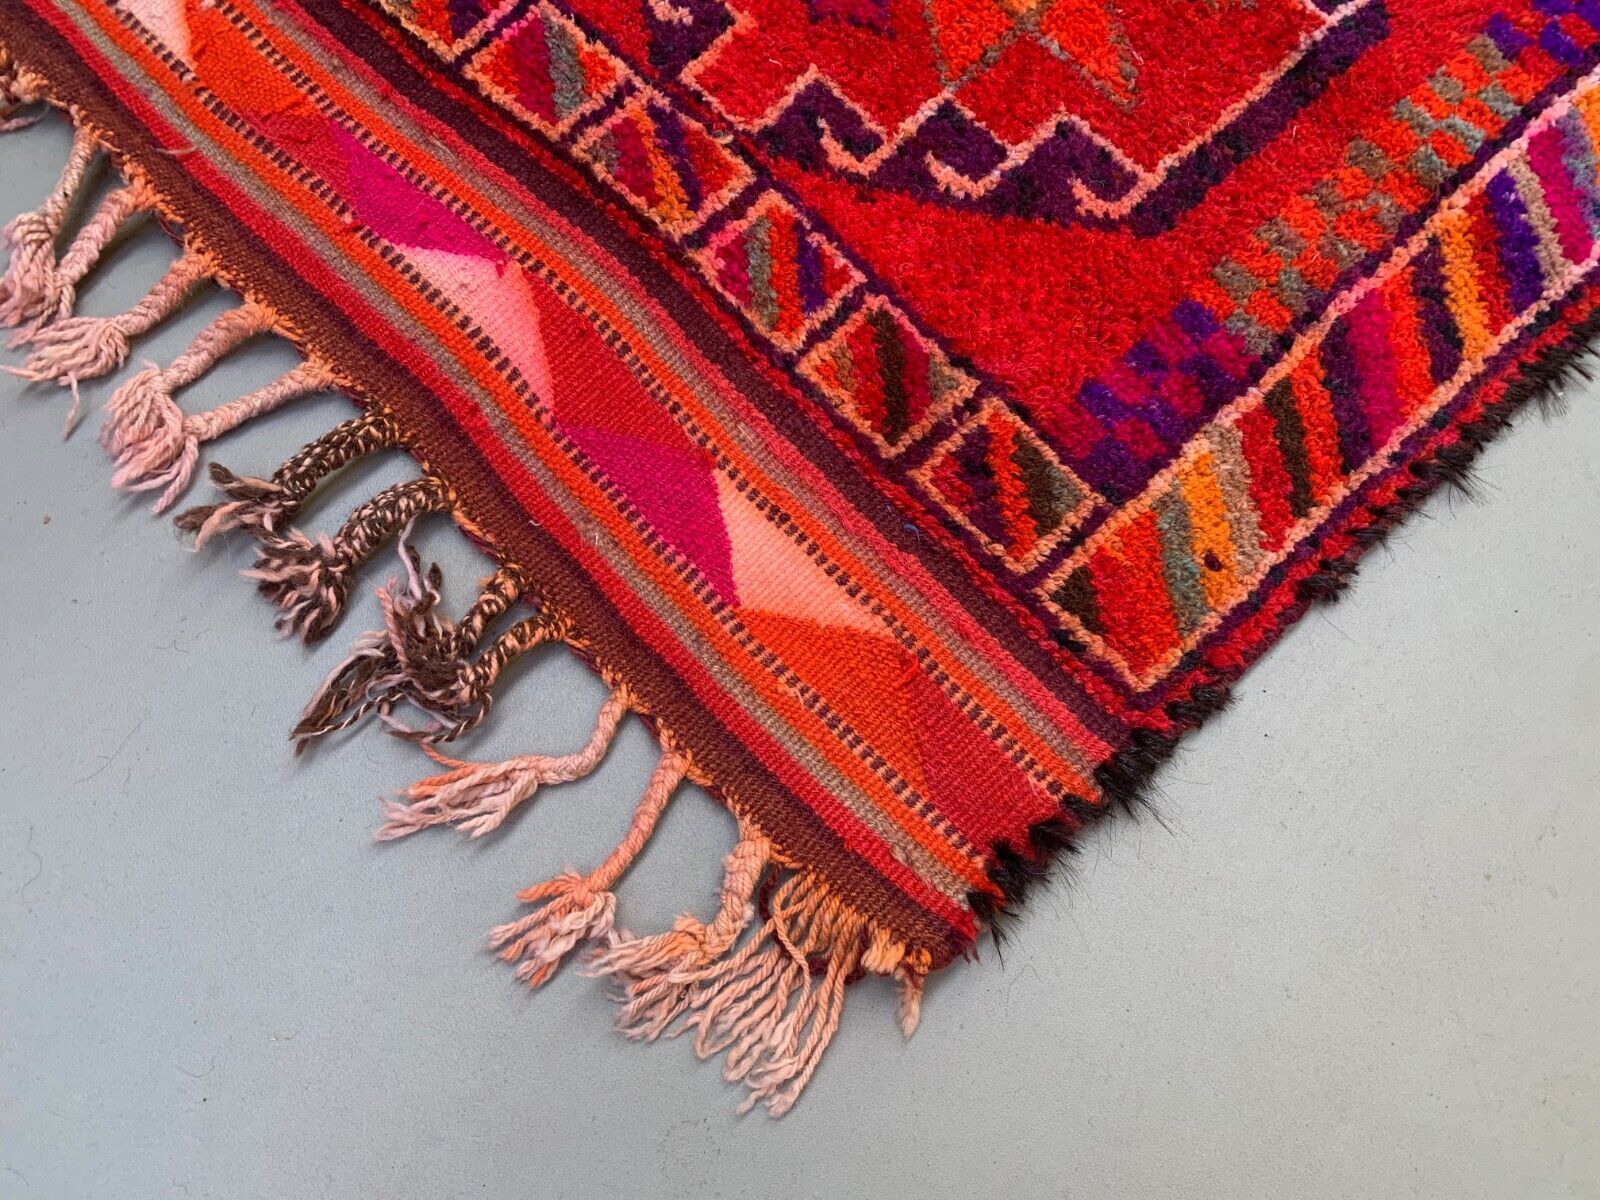 Vintage Turkish  Tribal Runner 417x94 cm veg dye wool rug tribal, handmade